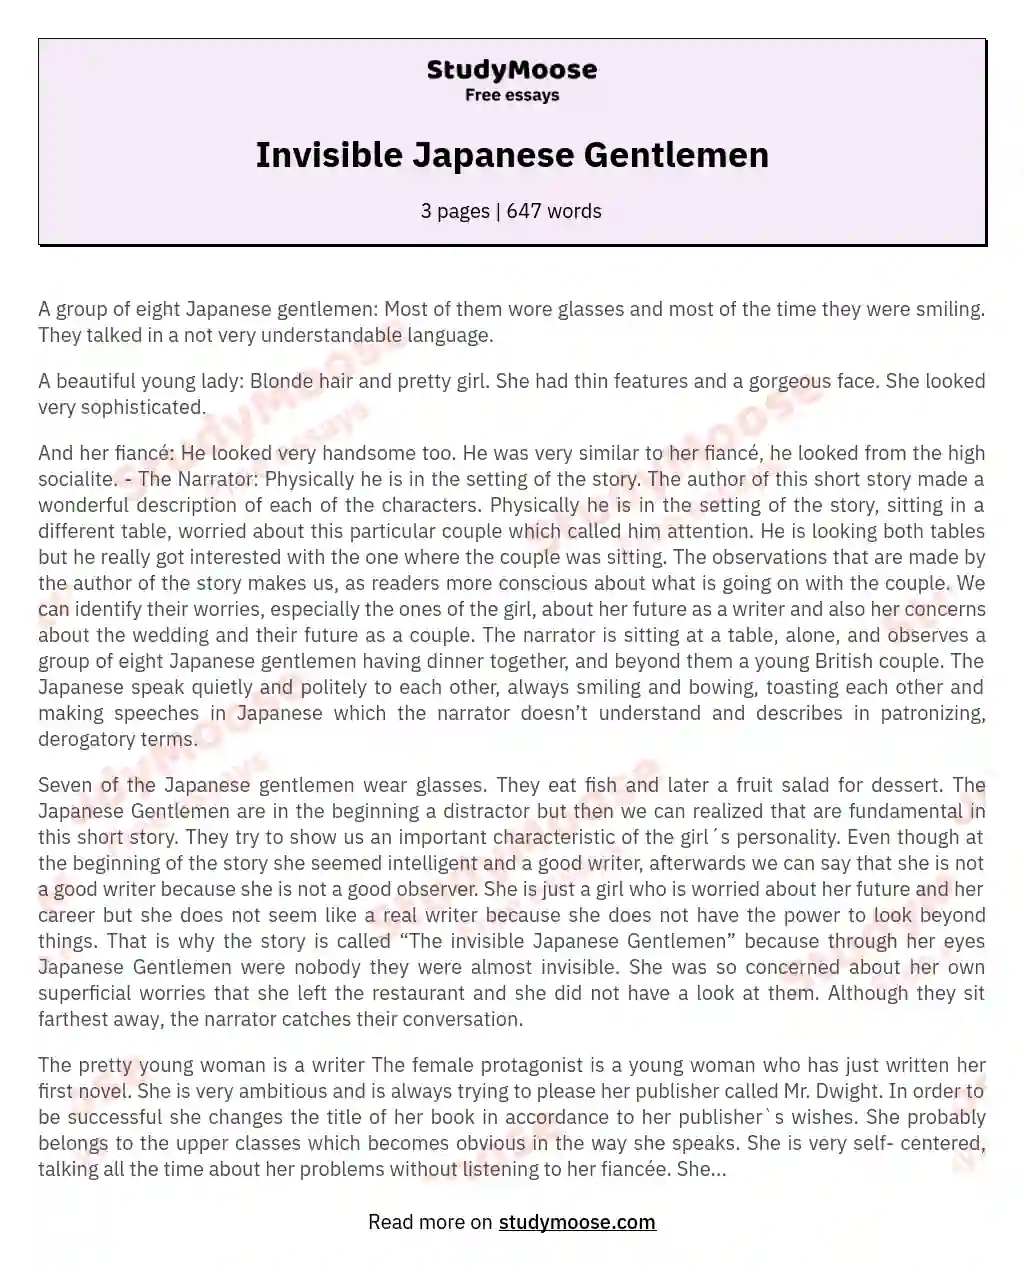 Invisible Japanese Gentlemen essay